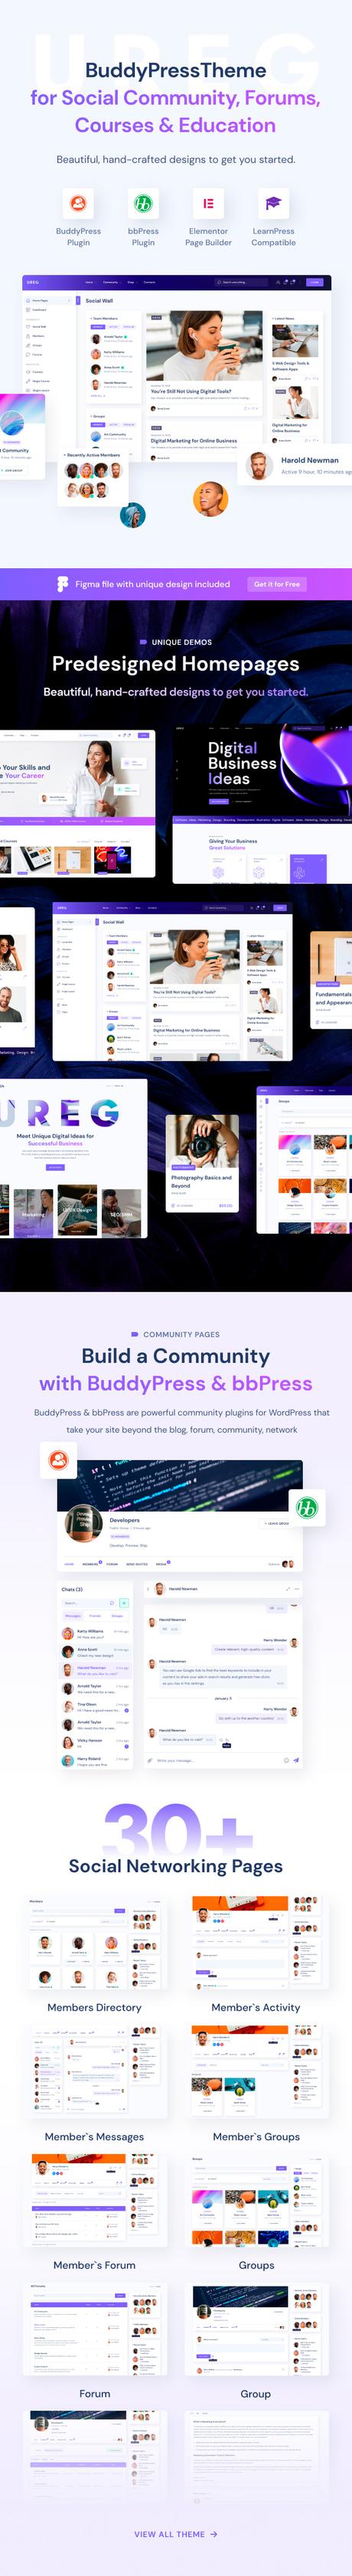 Ureg - Thème WordPress BuddyPress et communauté - 1